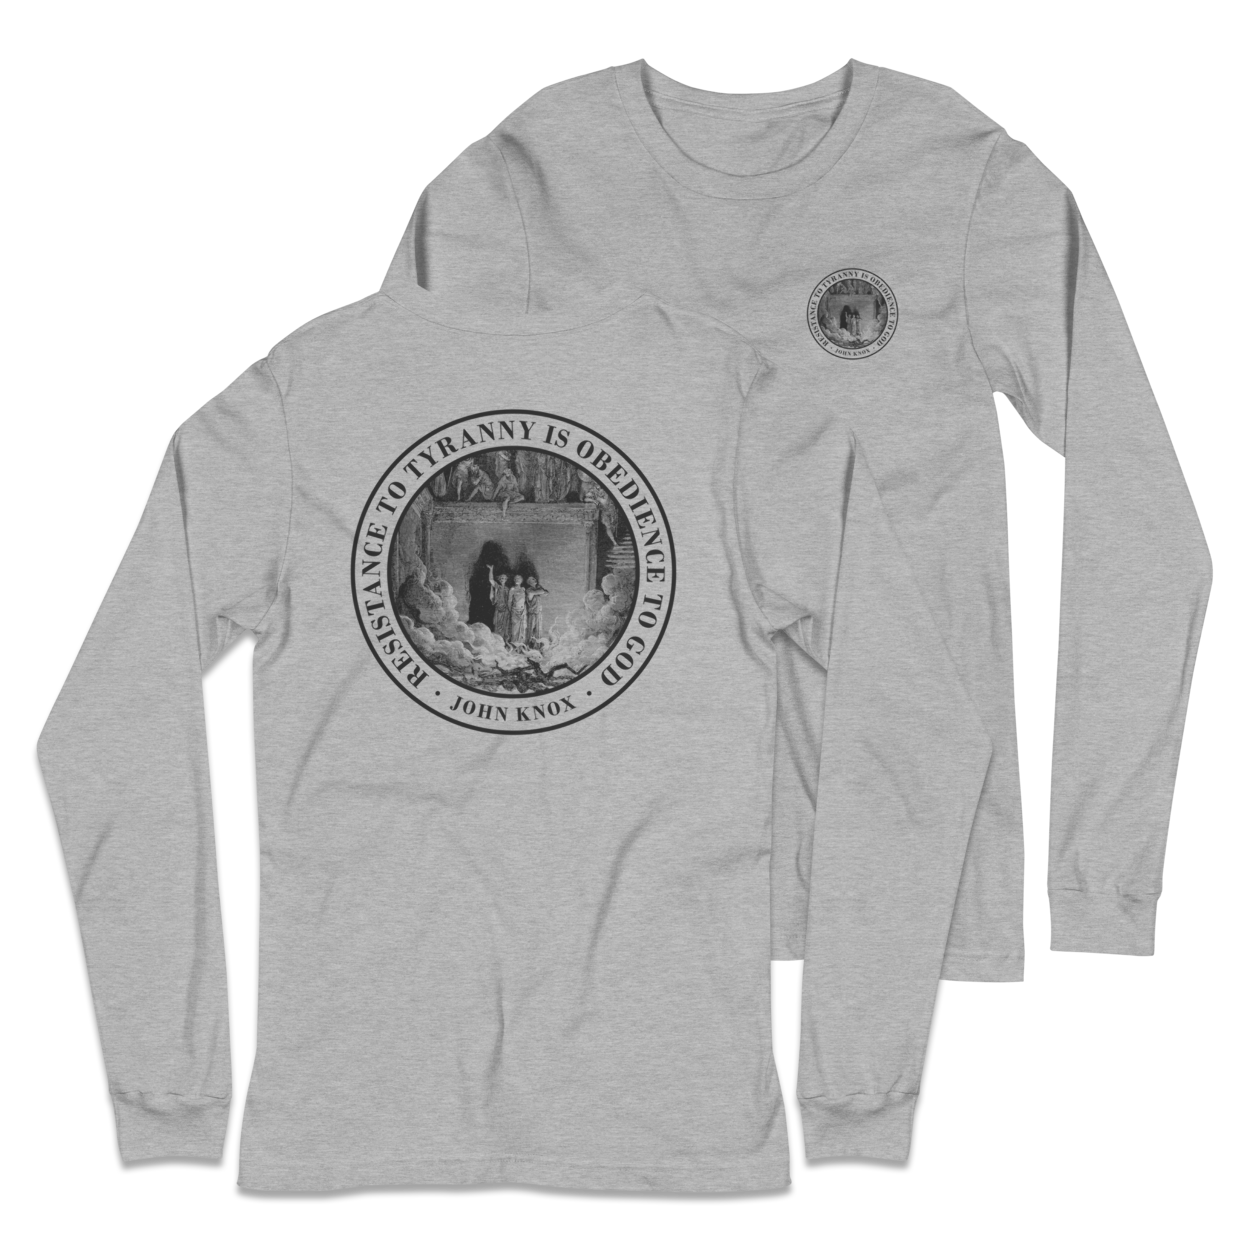 Resist Tyranny Long Sleeve Shirt - 1689 Designs